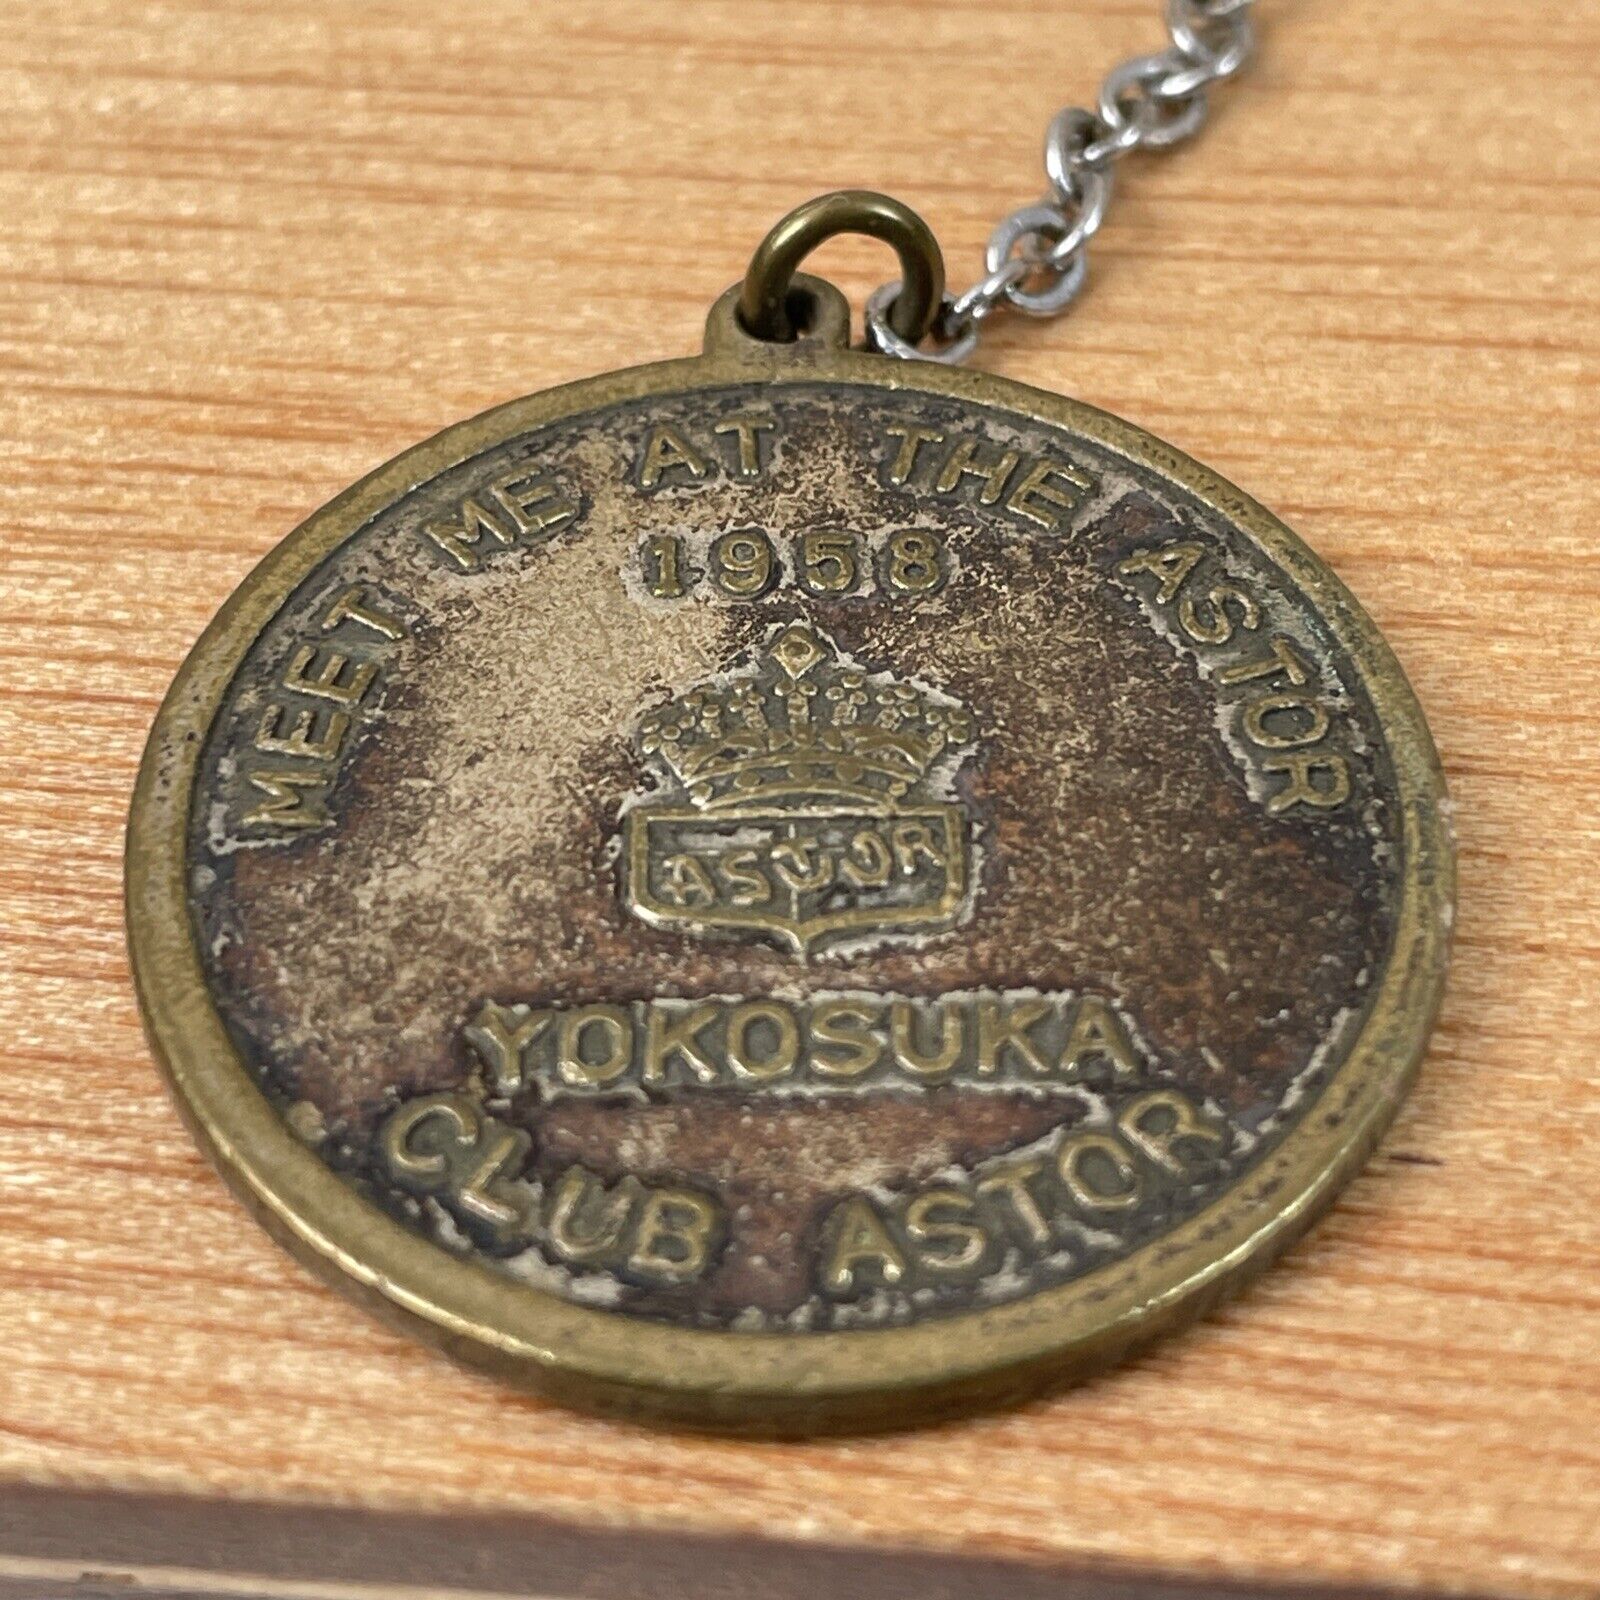 Club Astor Yokosuka Japan 1958 pendant necklace keychain thing